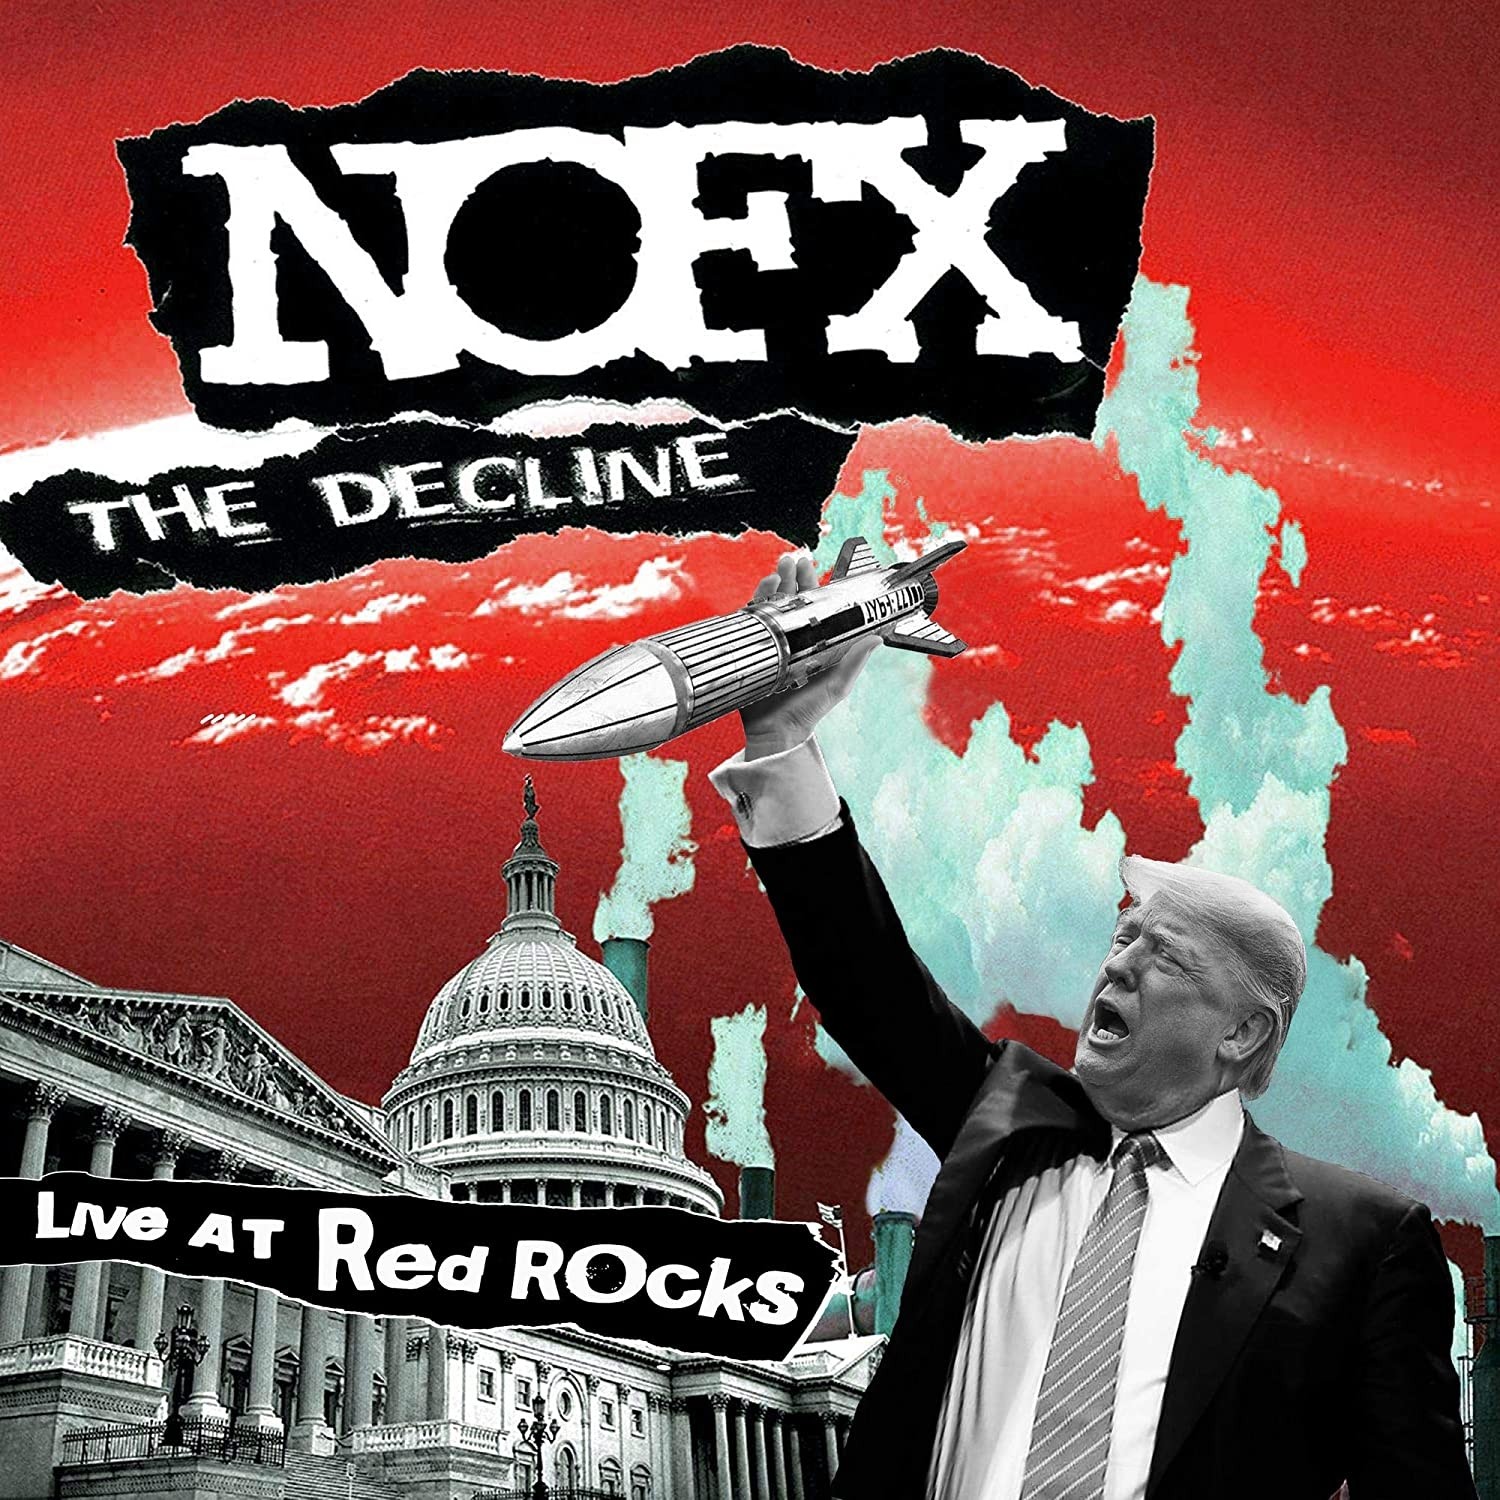 NOFX - The Decline (Live at Red Rocks) Vinyl LP